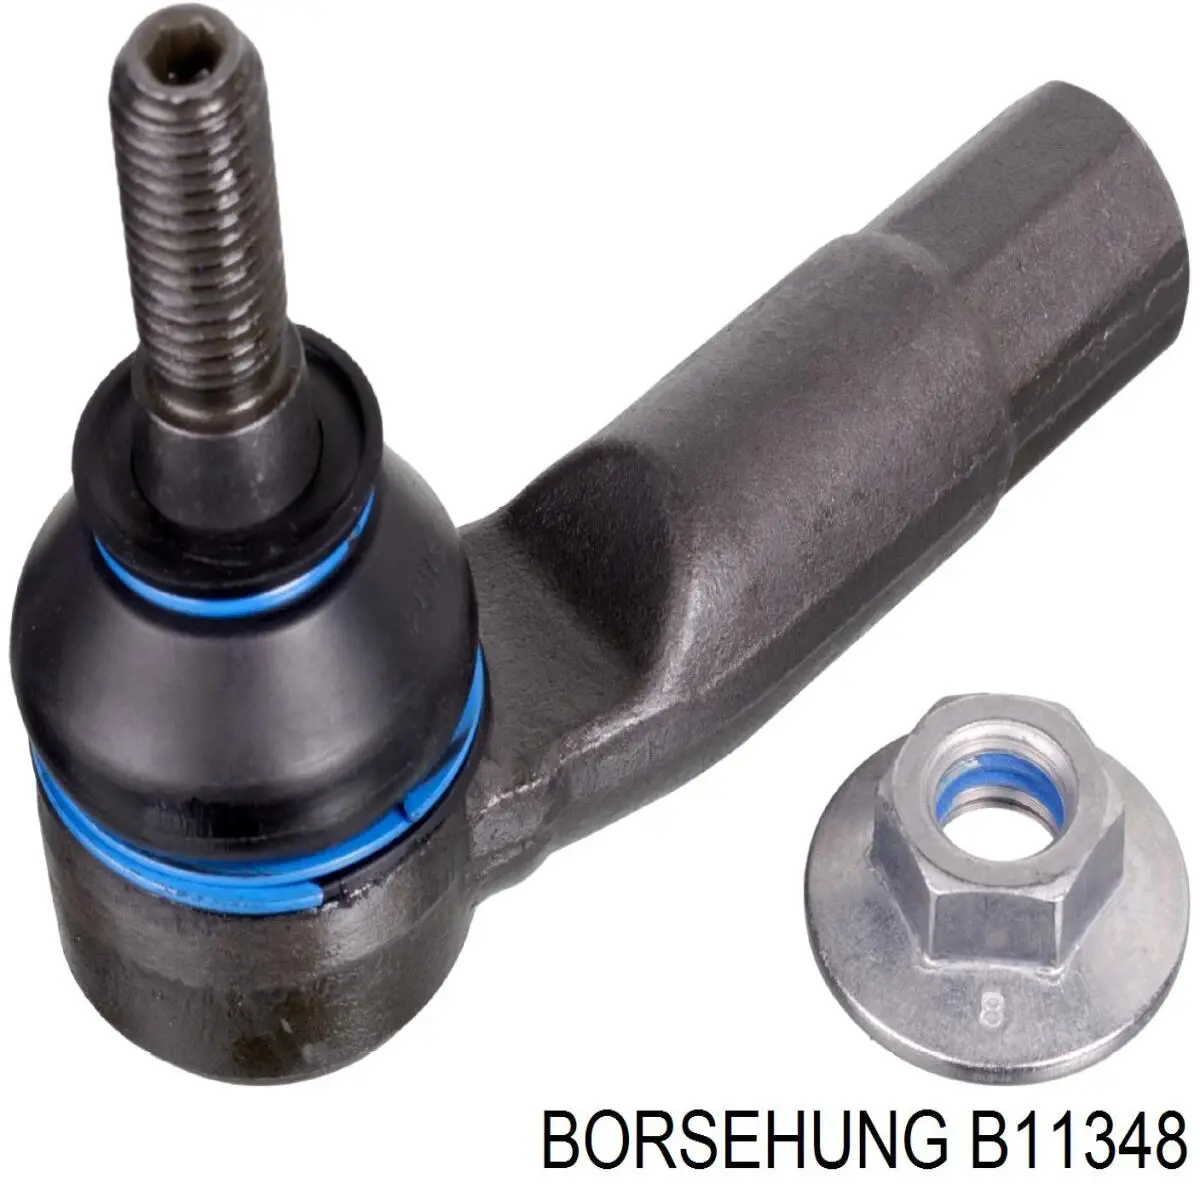 B11348 Borsehung rótula barra de acoplamiento exterior